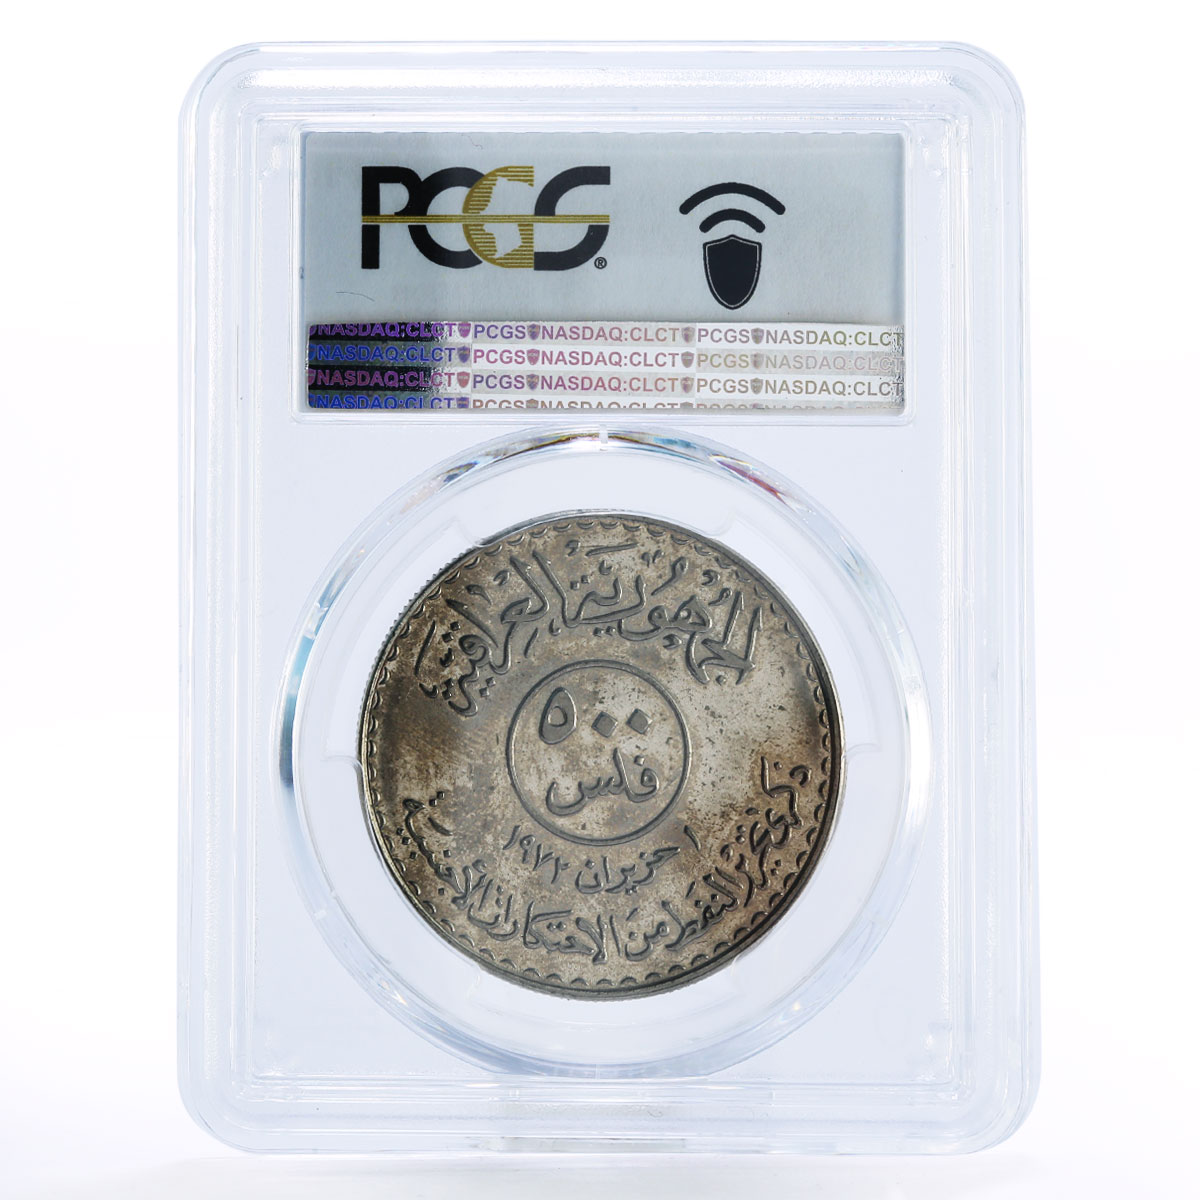 Iraq 500 fils Oil Nationalization Oil Refinery Plant PR66 PCGS nickel coin 1973